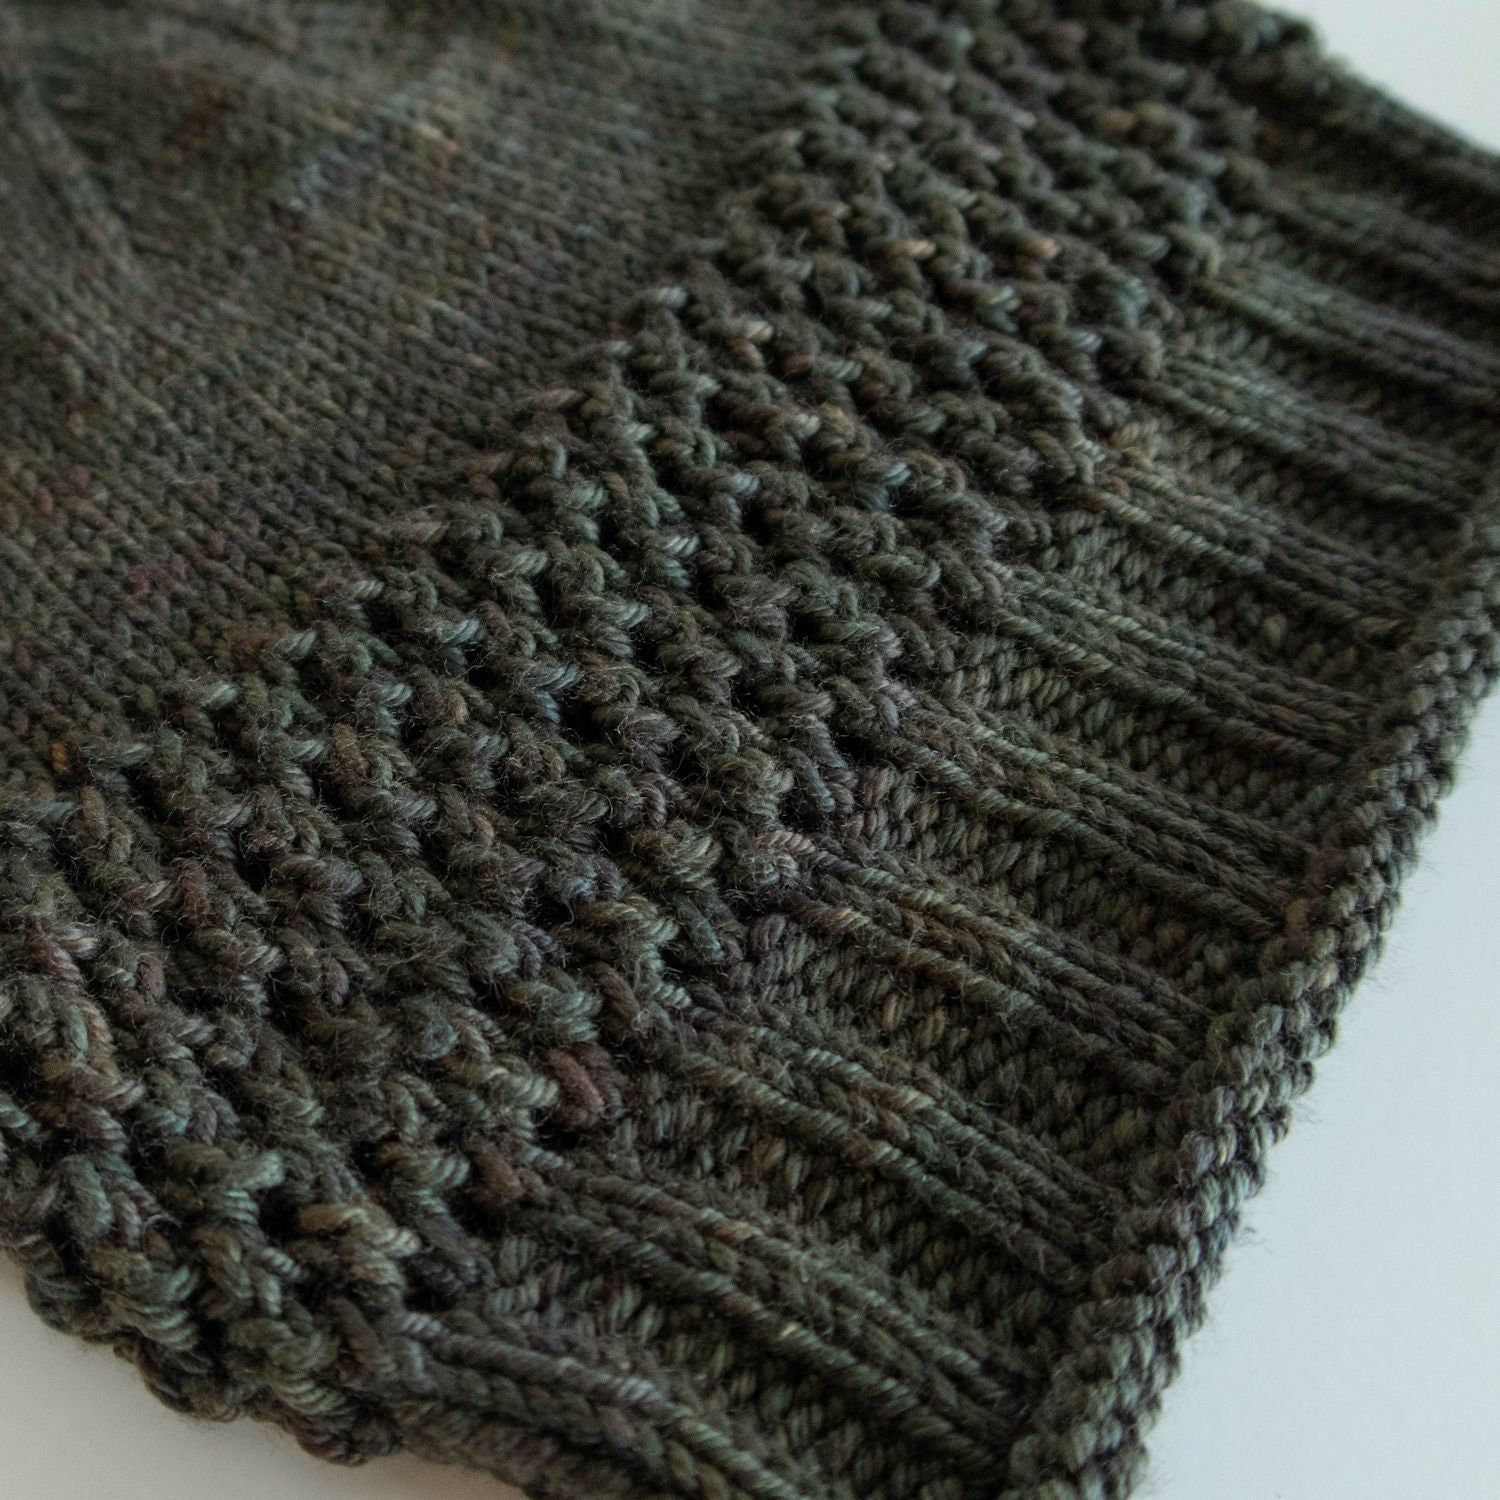 Cowi Hat Knitting Pattern